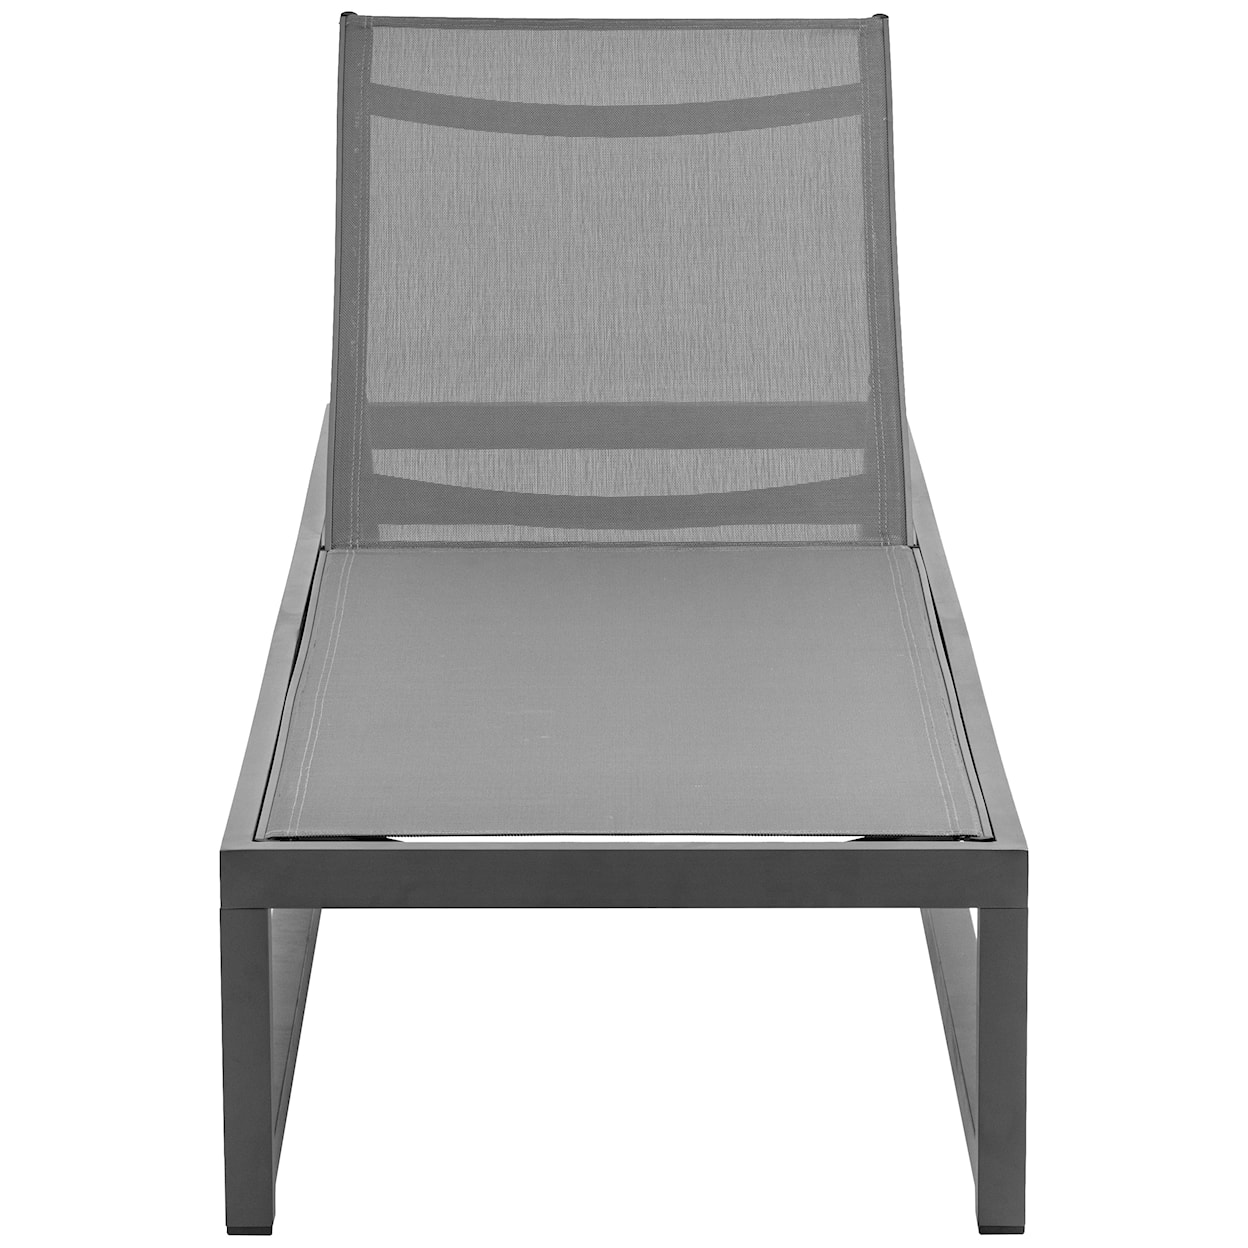 Meridian Furniture Maldives Adjustable Sun Chaise Lounge Chair